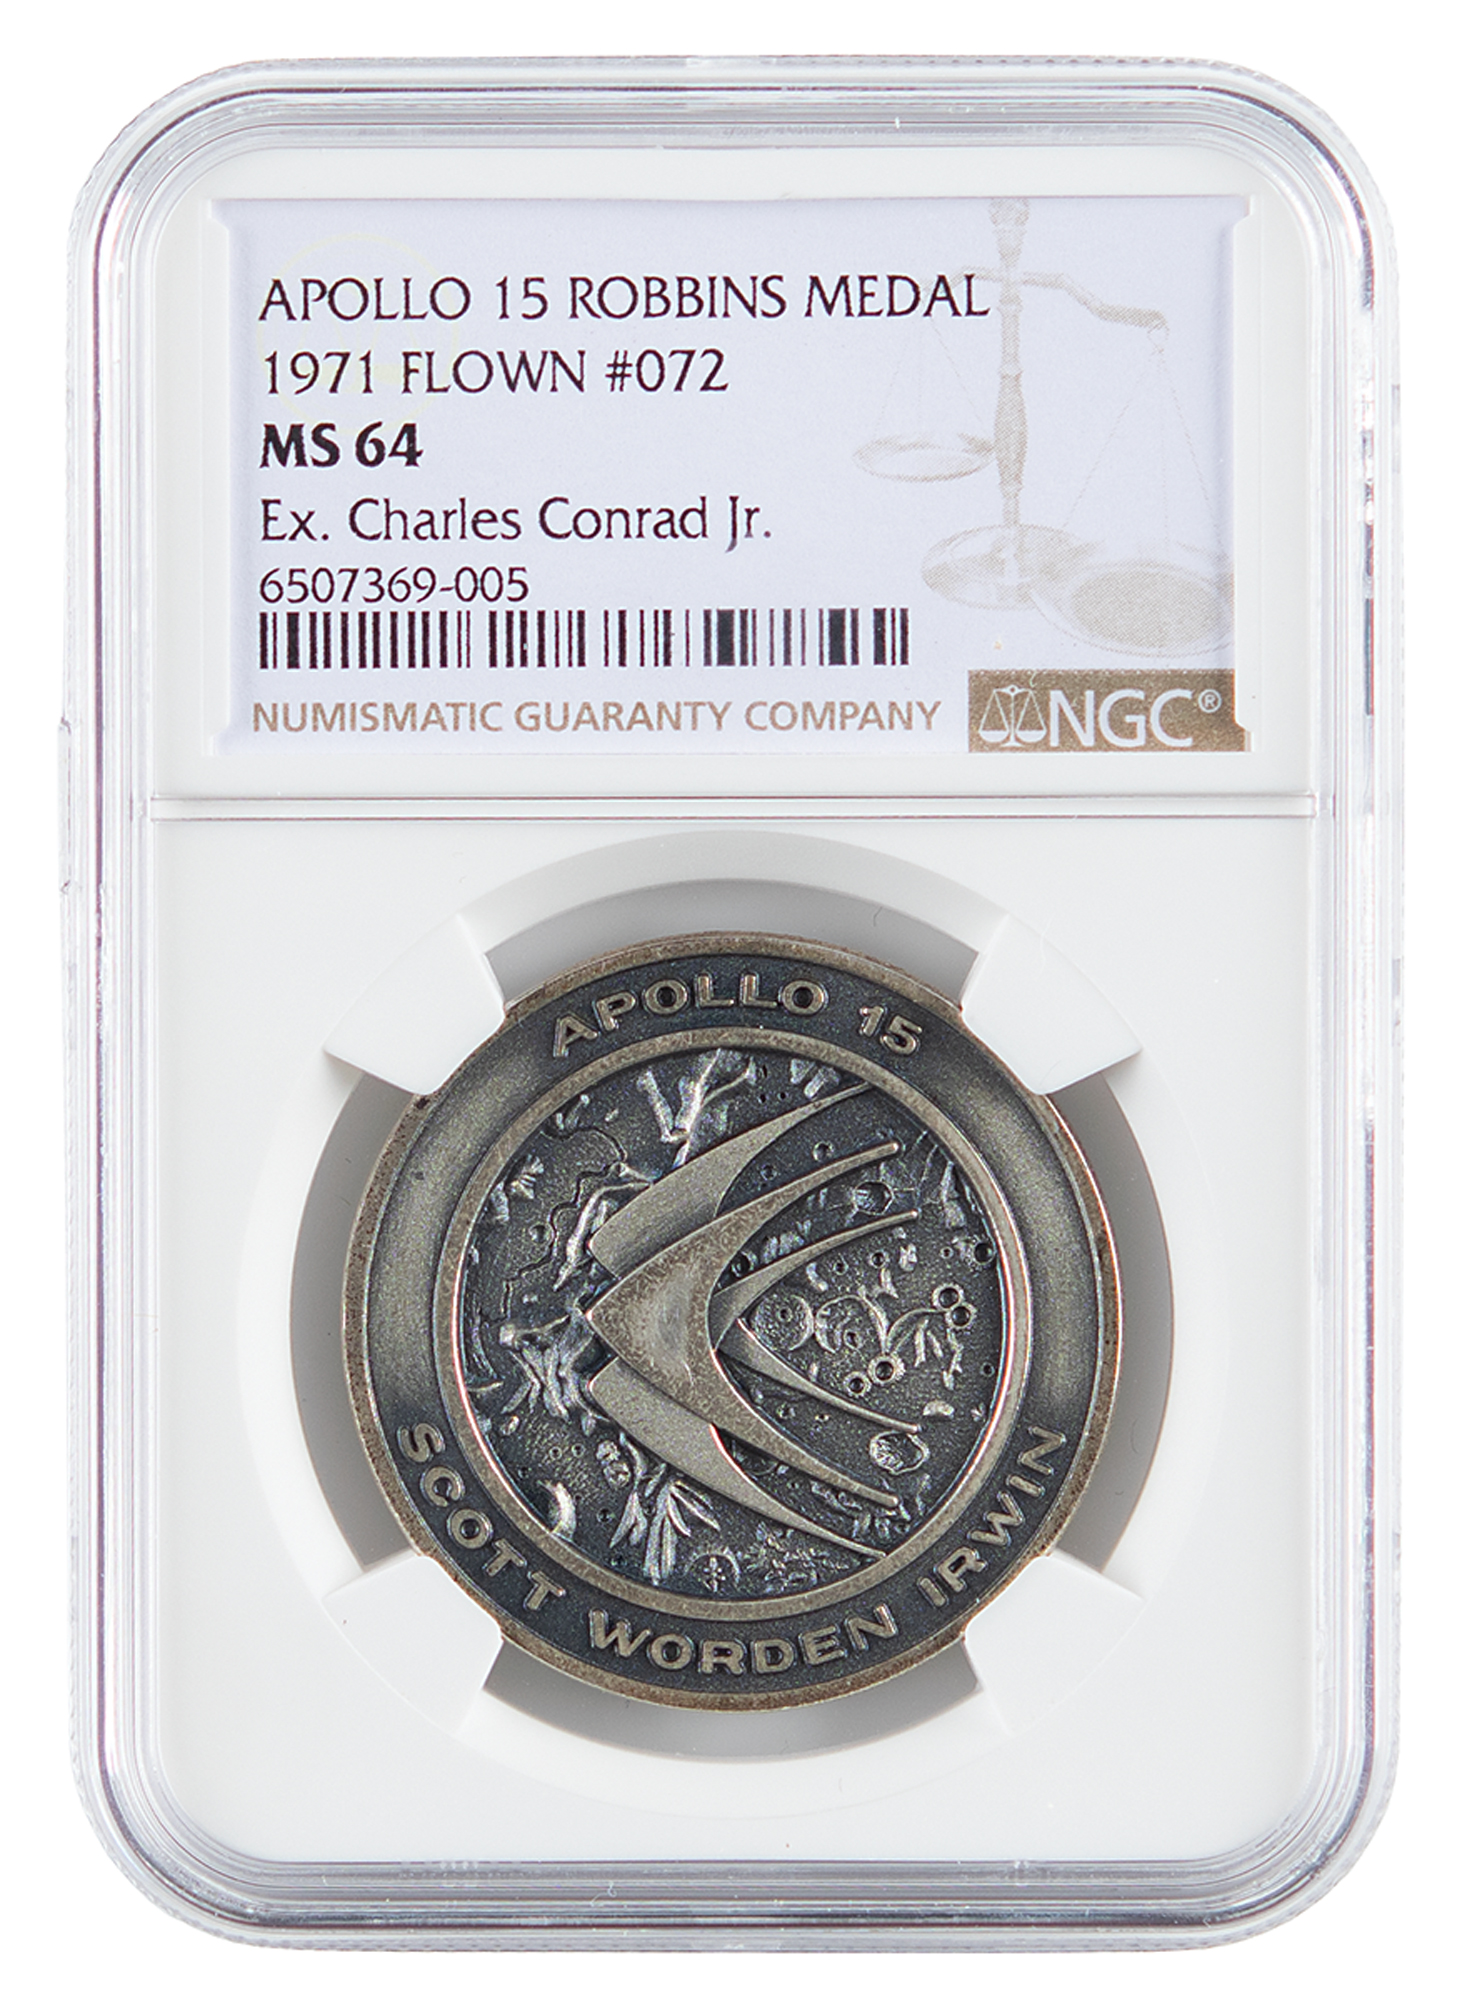 Charles Conrad's Apollo 15 Flown Robbins Medallion | RR Auction